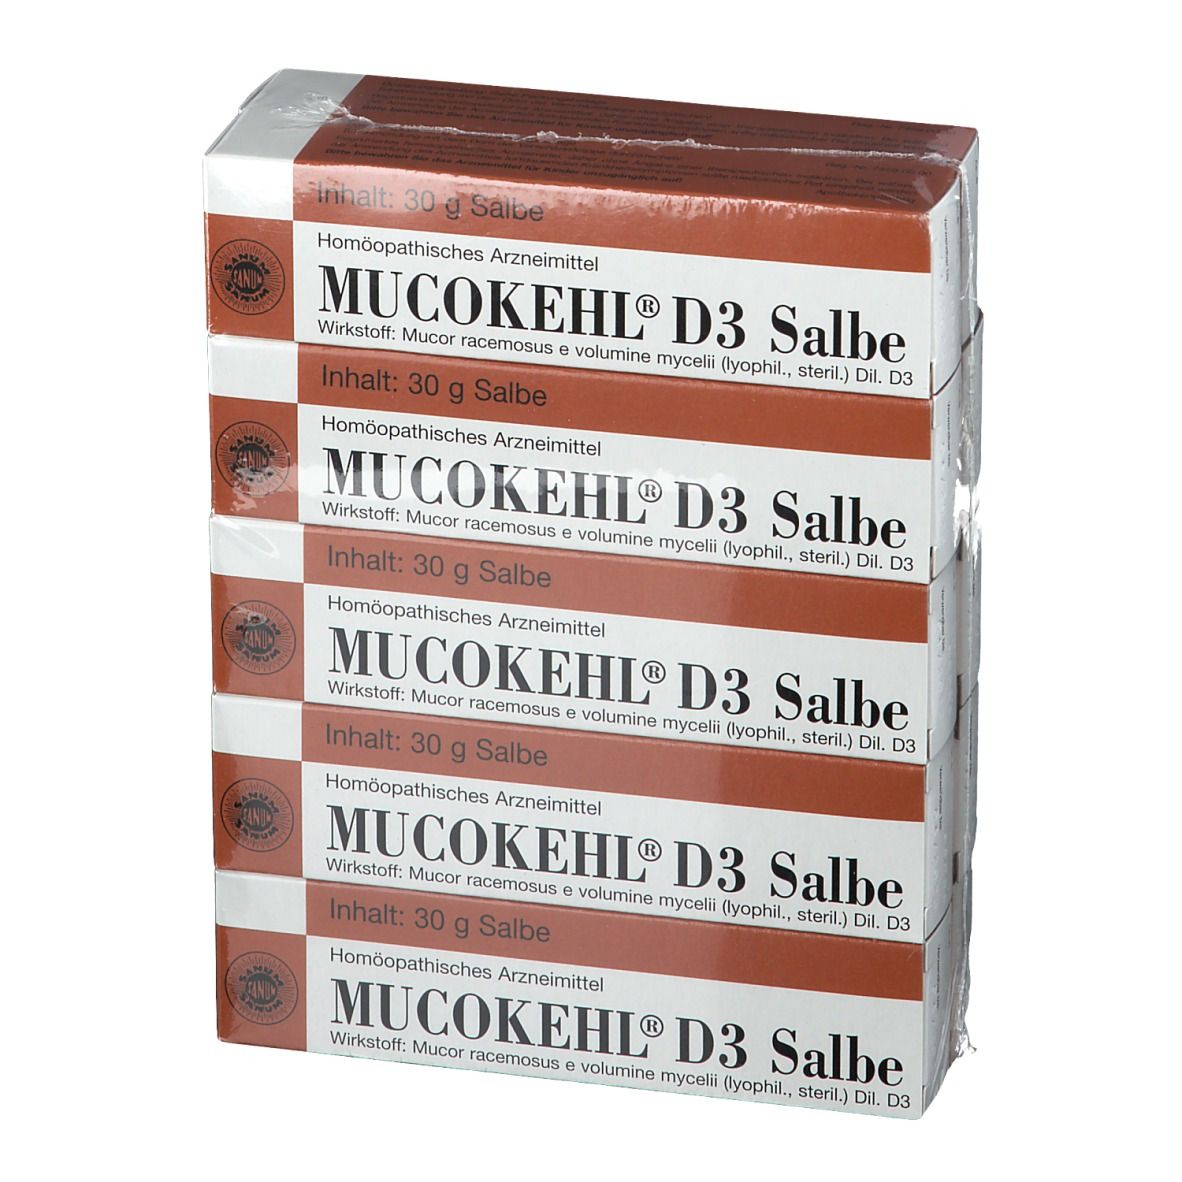 Mucokehl® D3 Salbe